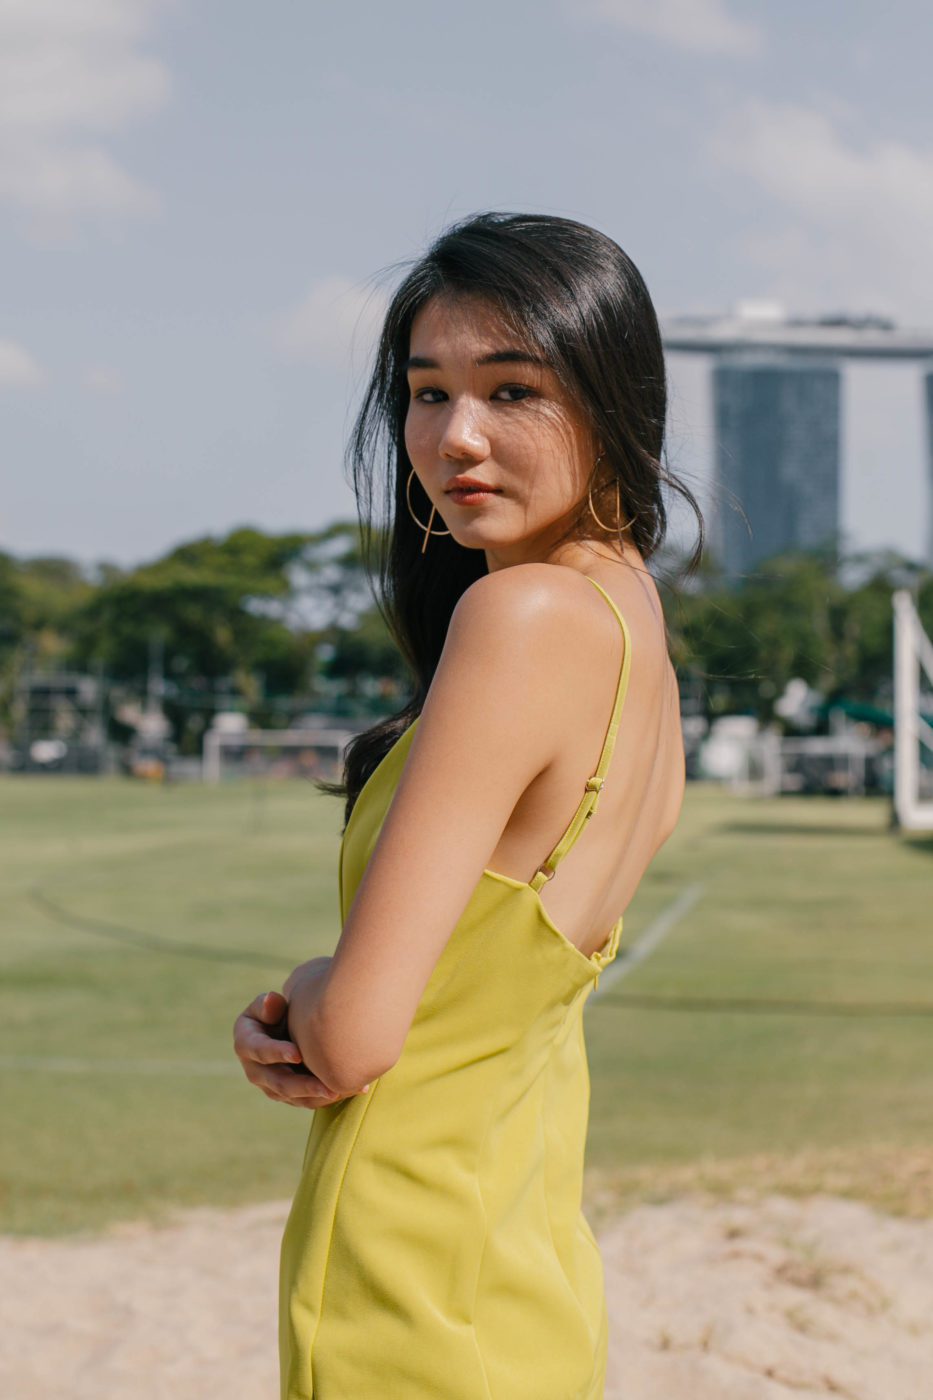 mavis siow basic models singapore female